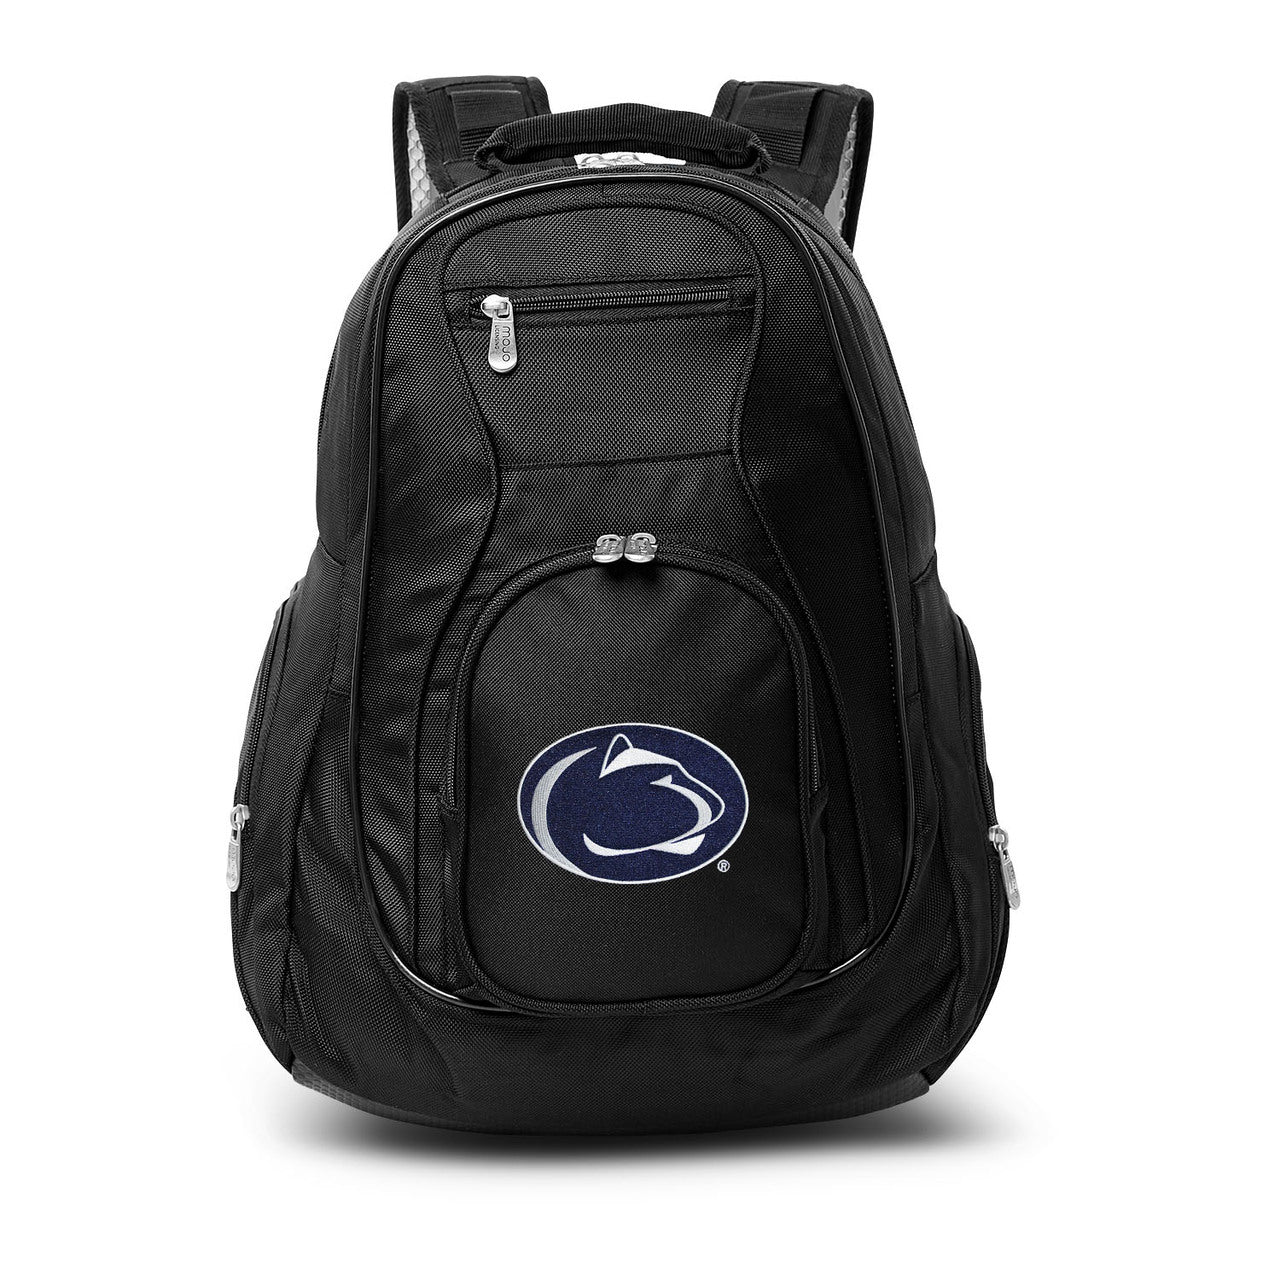 Penn State Nittany Lions Laptop Backpack Black